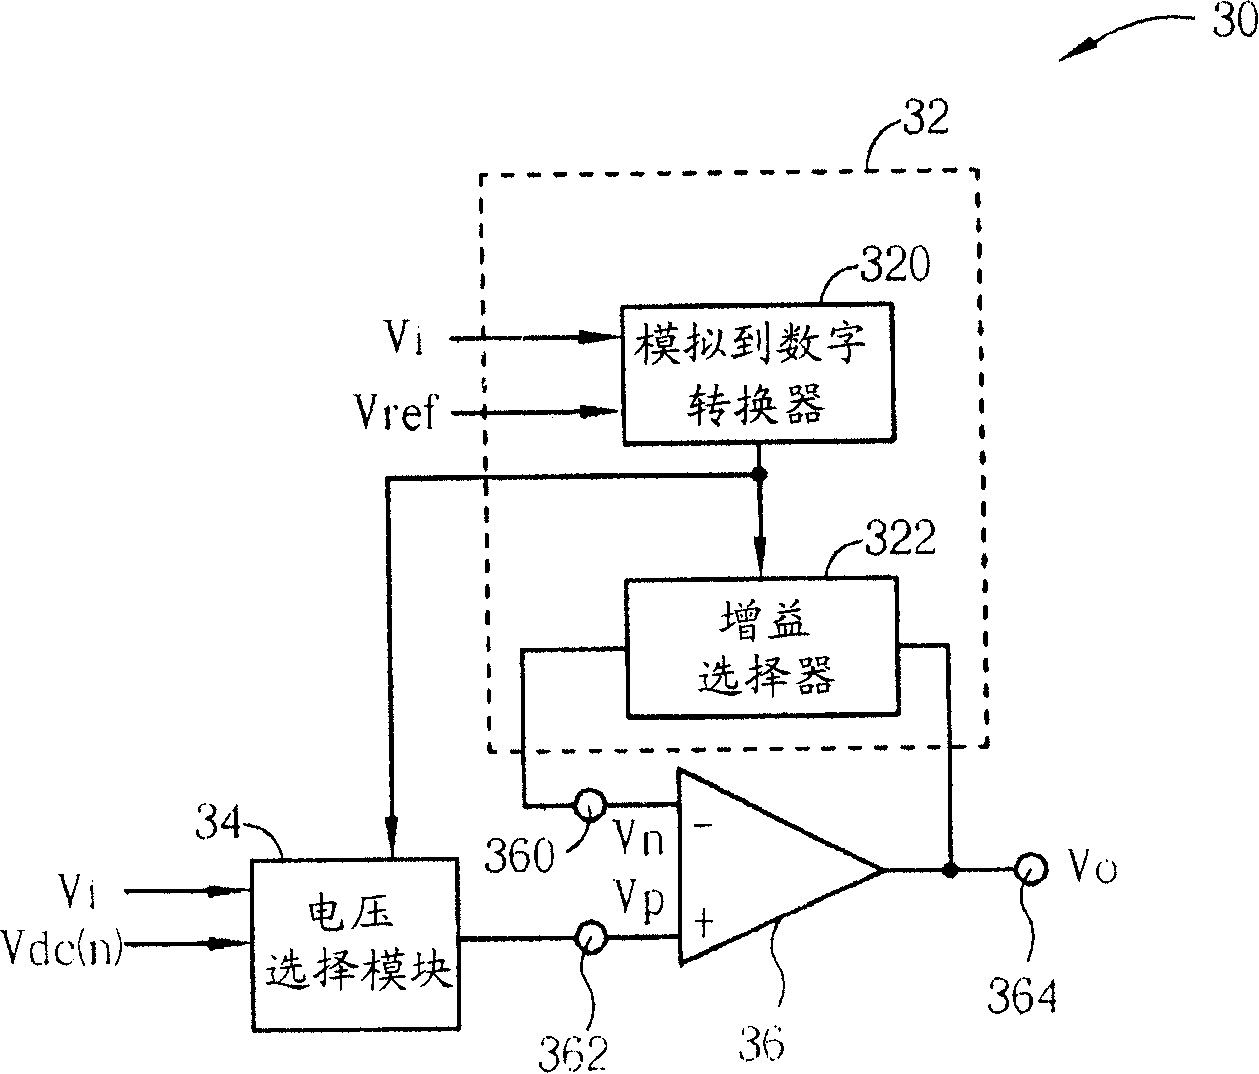 Voltage conversion device with non-linear gain